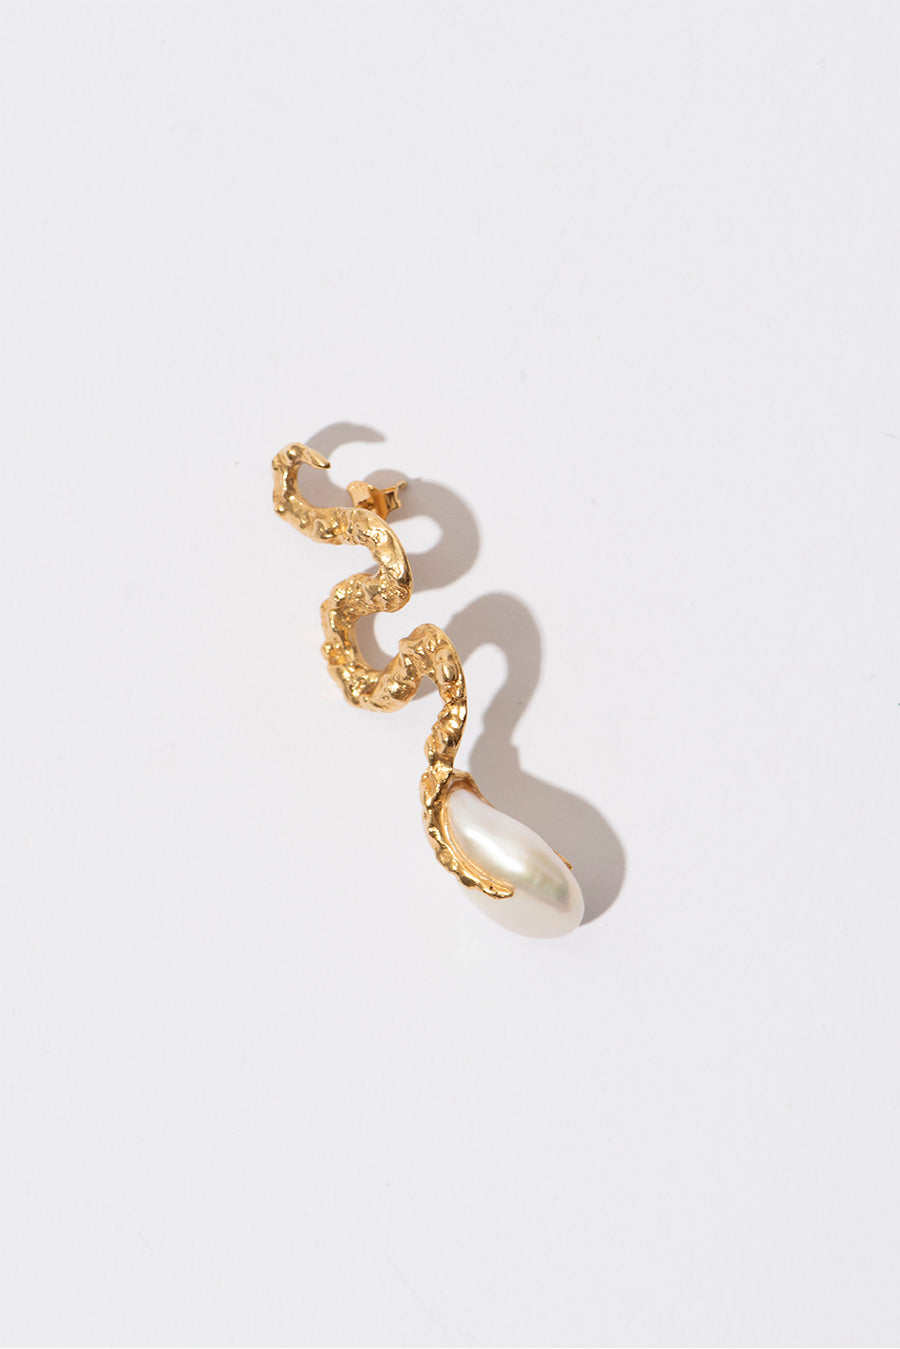 The Snake Pearl Earring